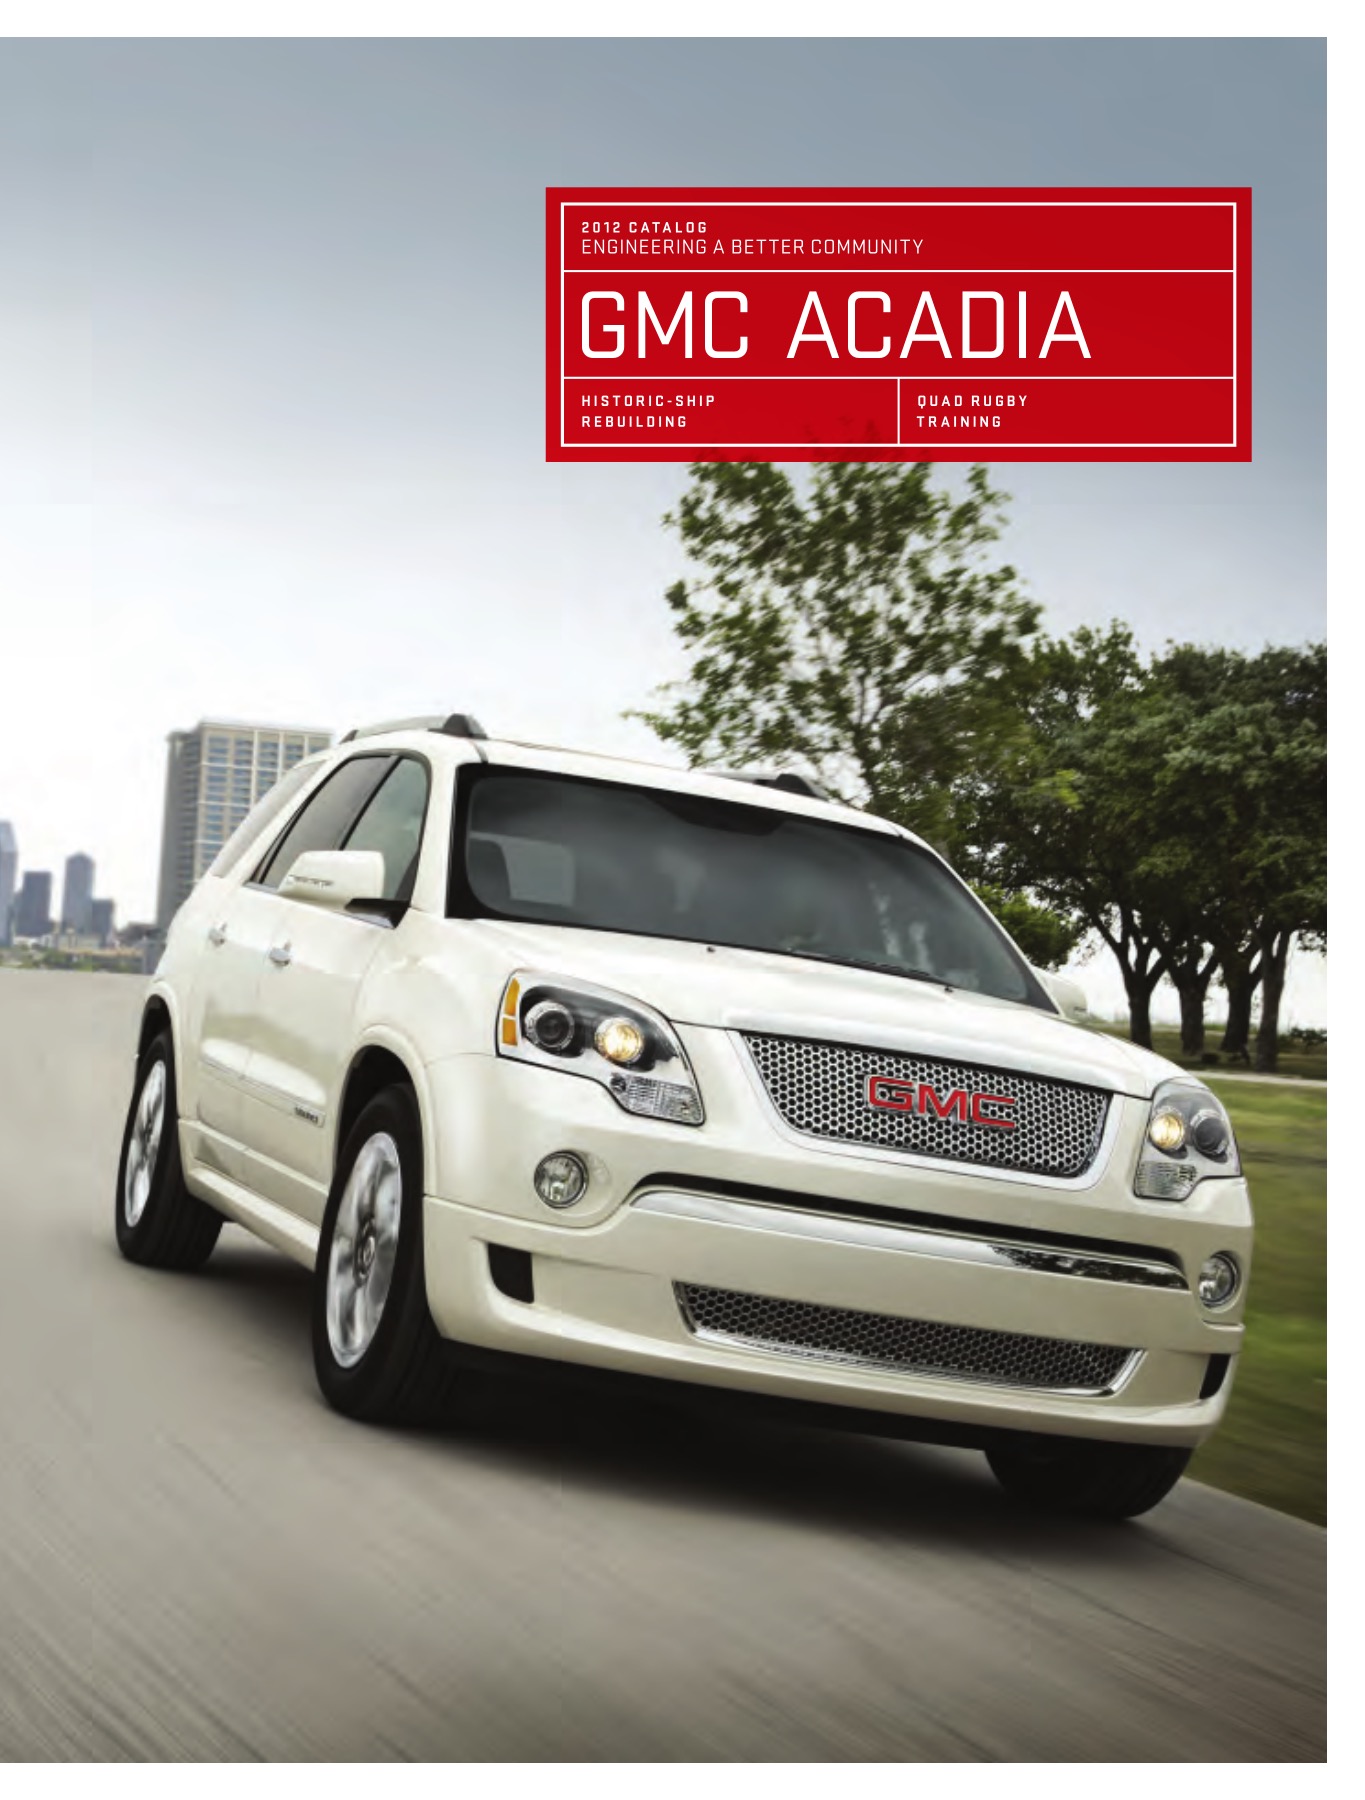 2012 GMC Acadia Brochure